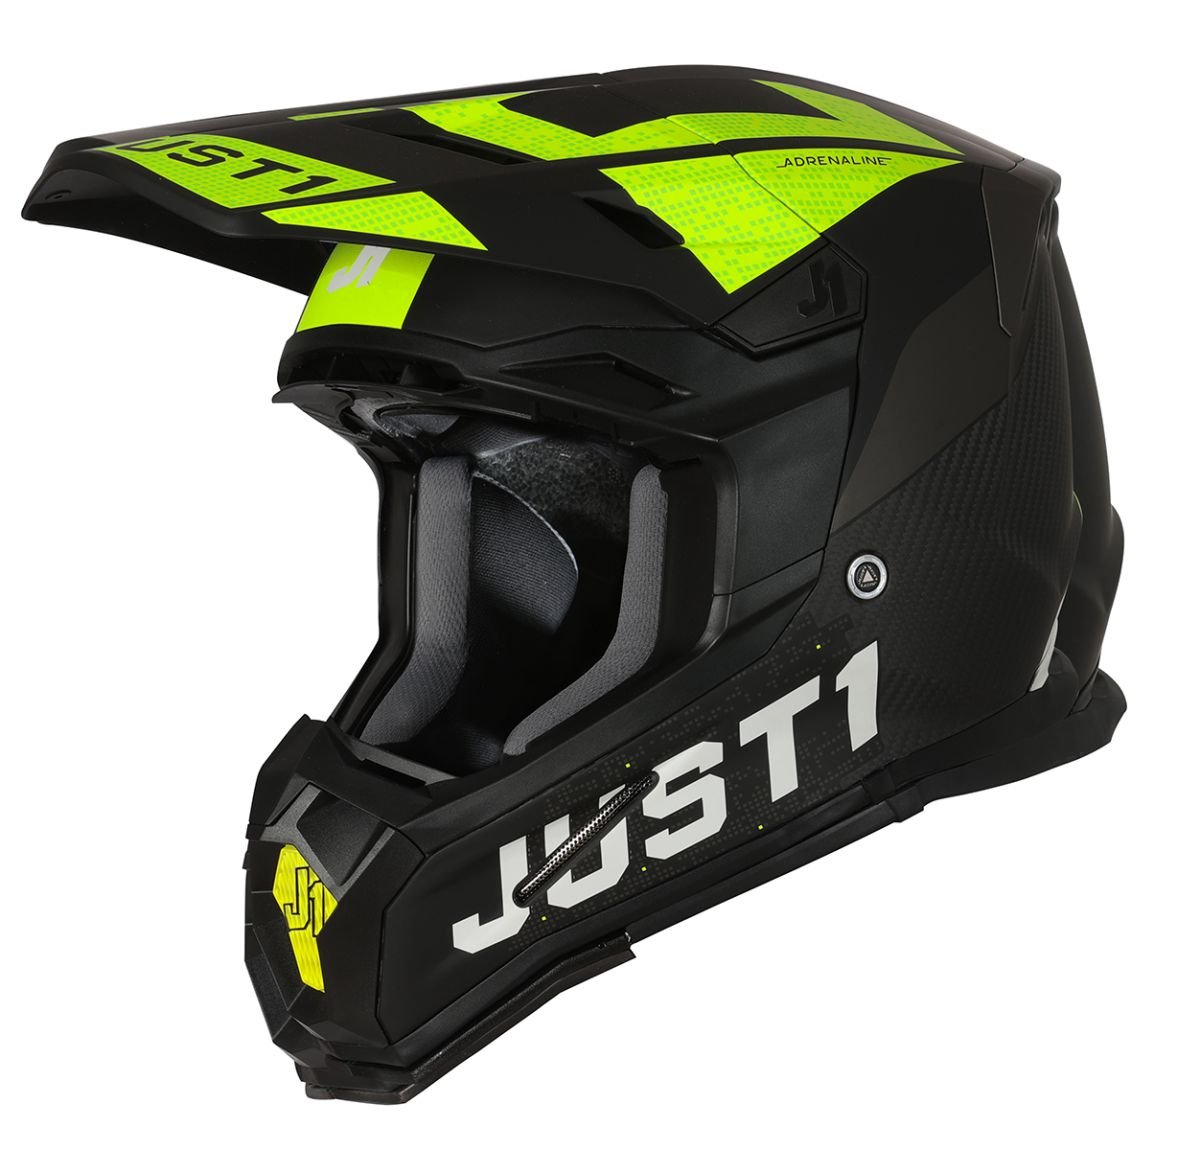 Image of Just1 Helmet J-22 Adrenaline Schwarz Gelb Fluo Carbon Matt Crosshelm Größe S